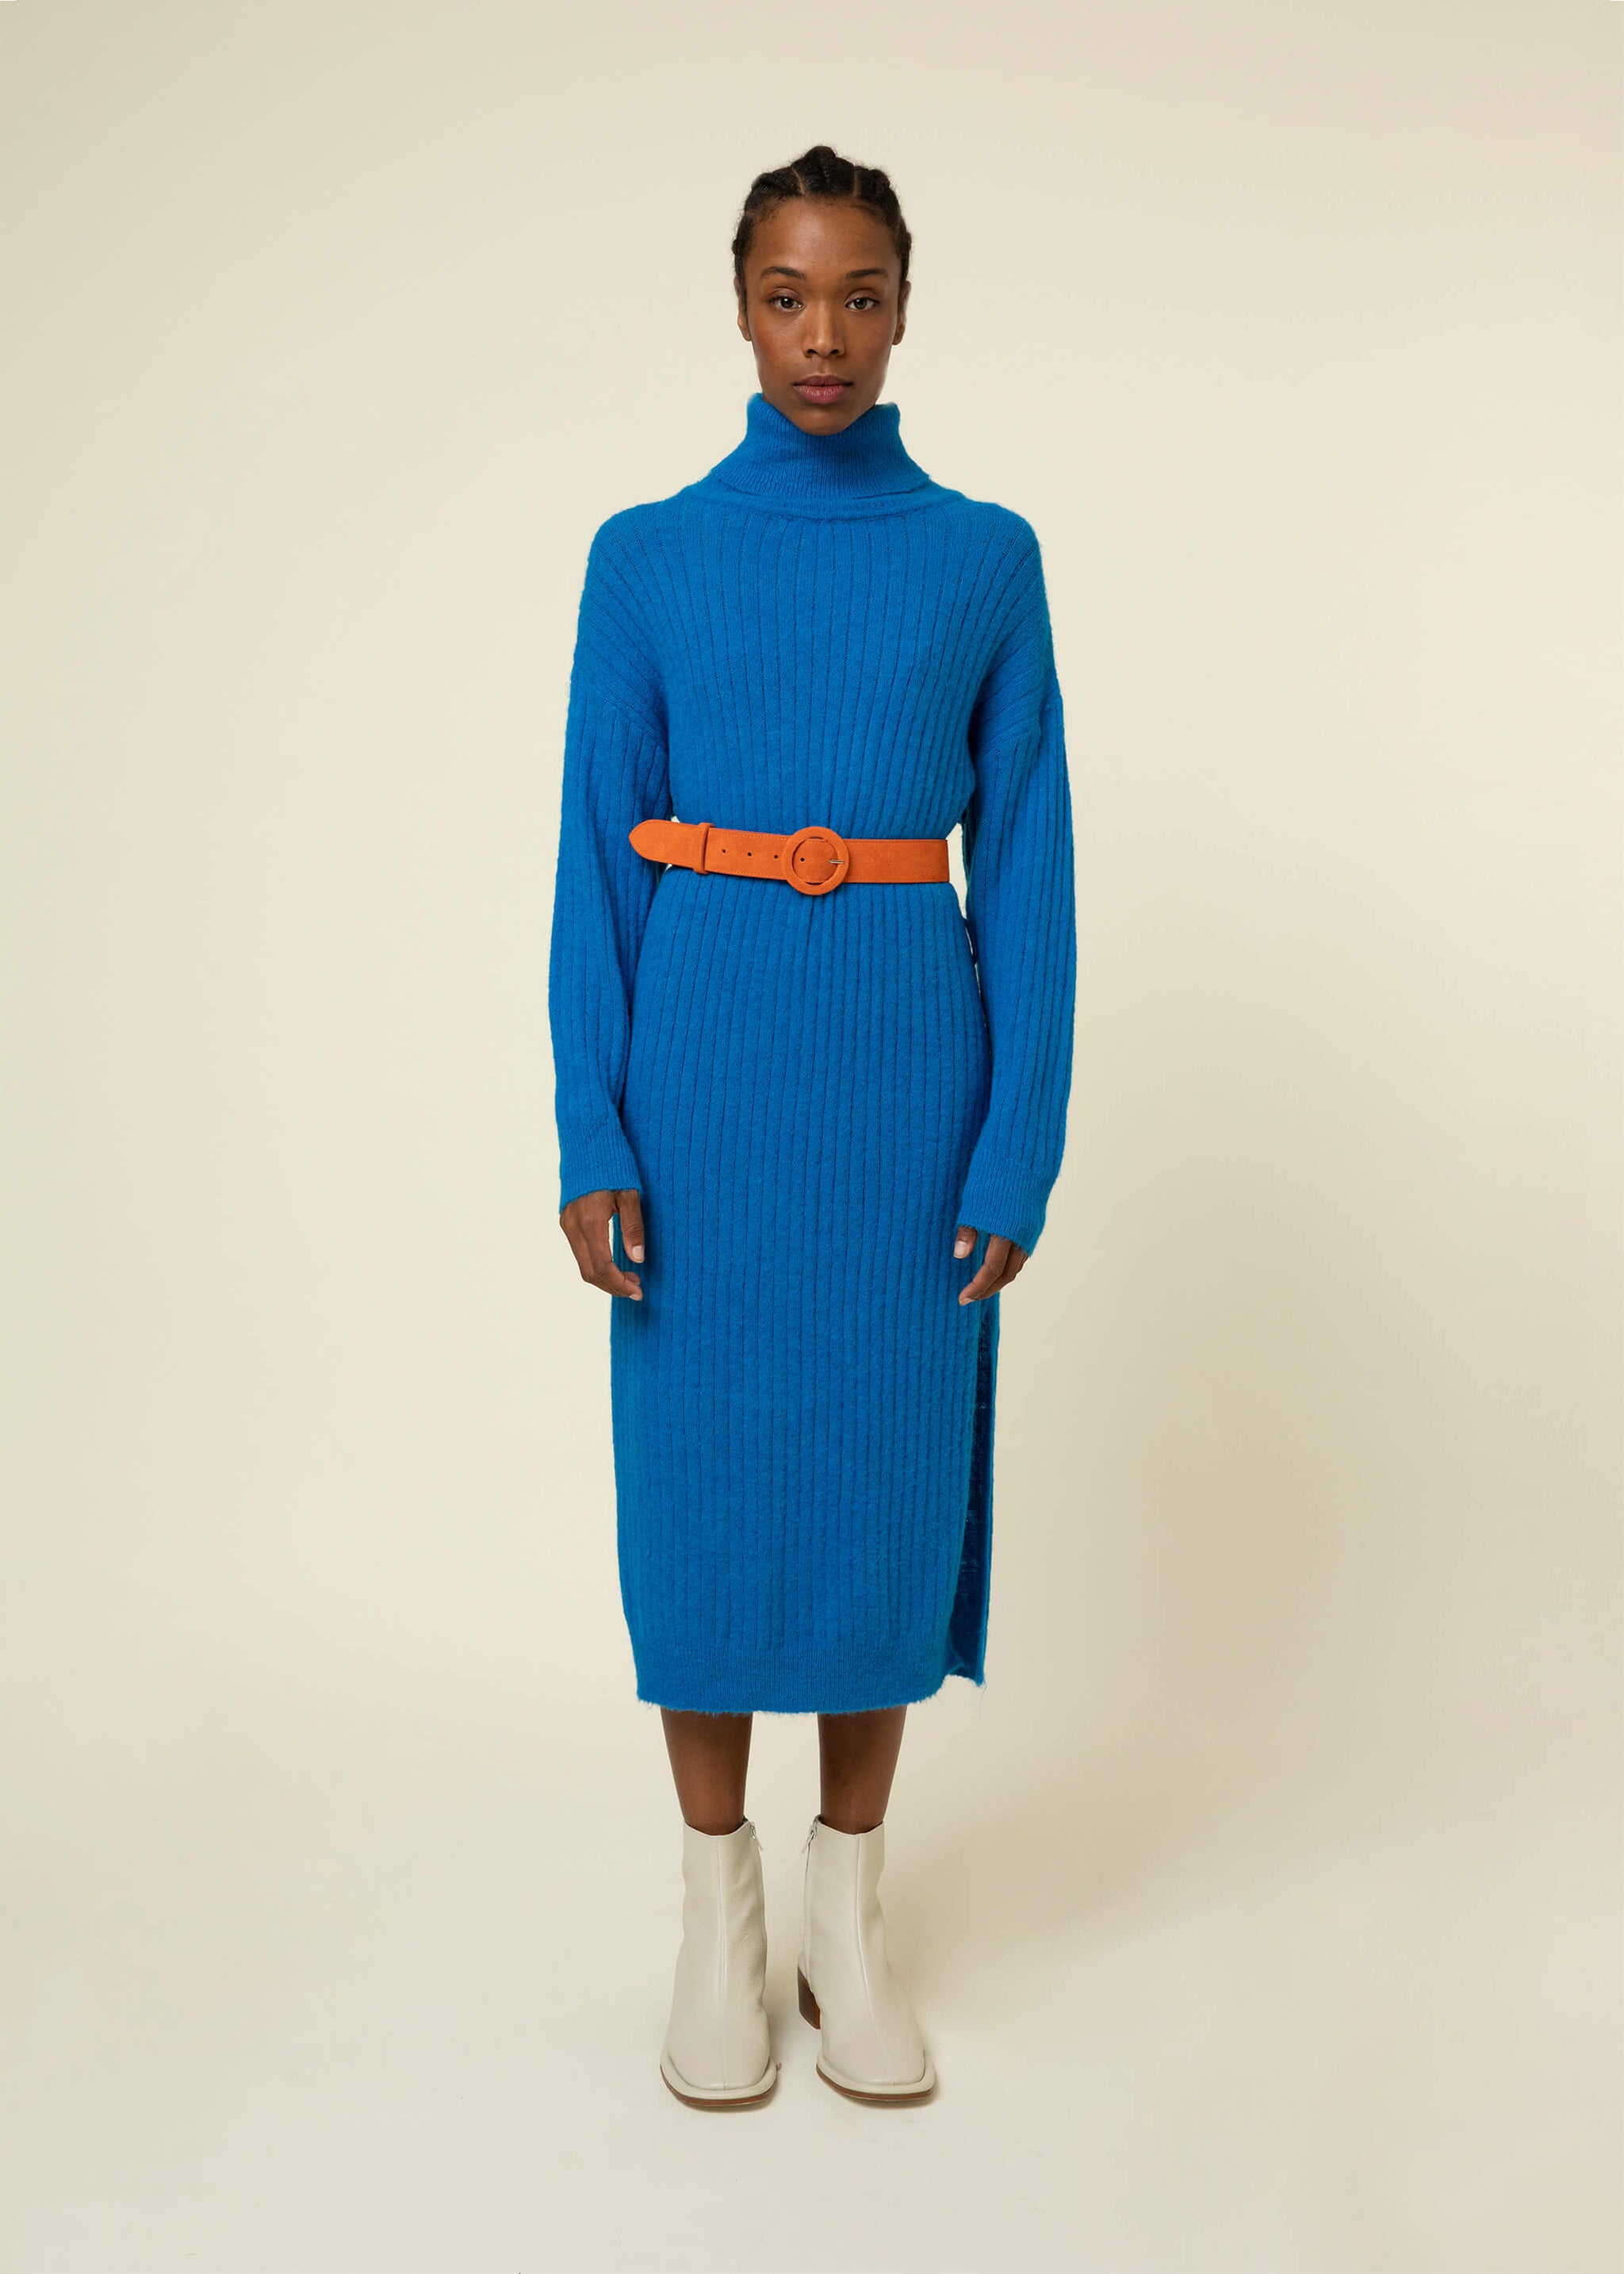 FRNCH Cobalt Blue Turtleneck Sweater Dress